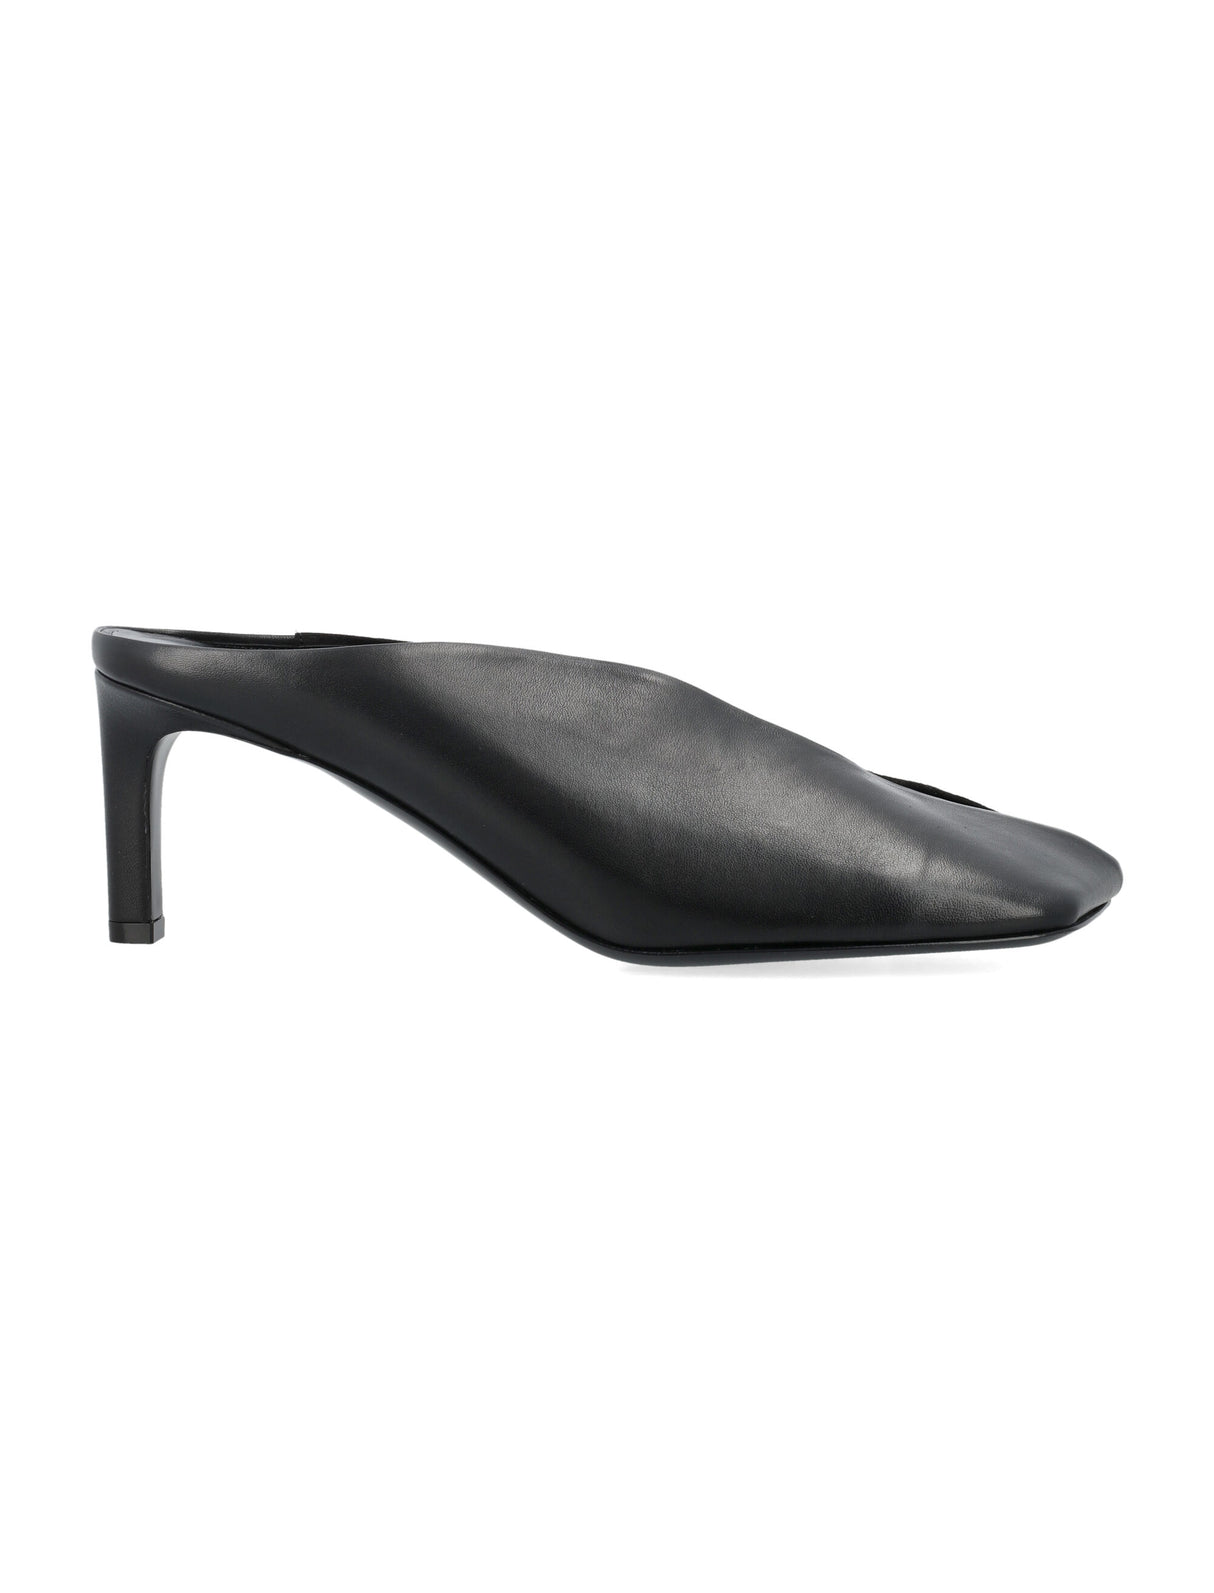 JIL SANDER High-Heeled Leather Flat for Women - Squared Toe, Nappa Lining, 7.5cm Heel Height